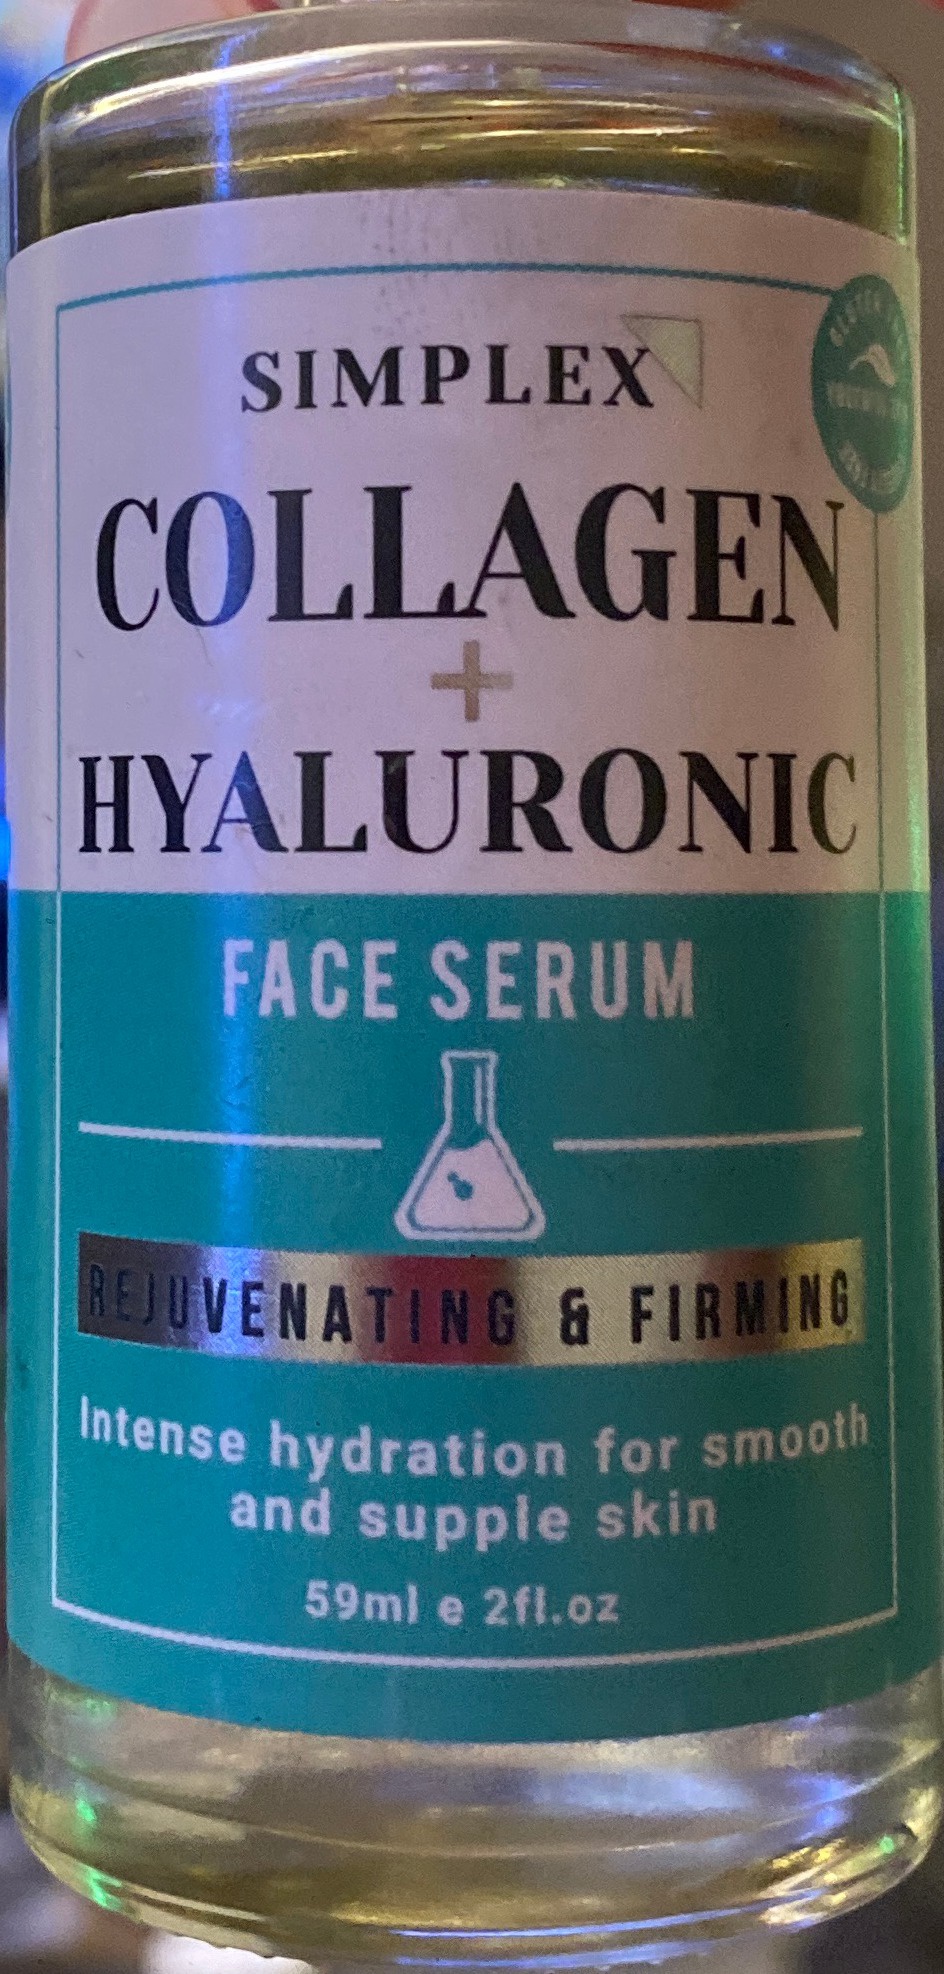 Simple x Little Mix Collagen + Hyaluronic Acid Face Serum